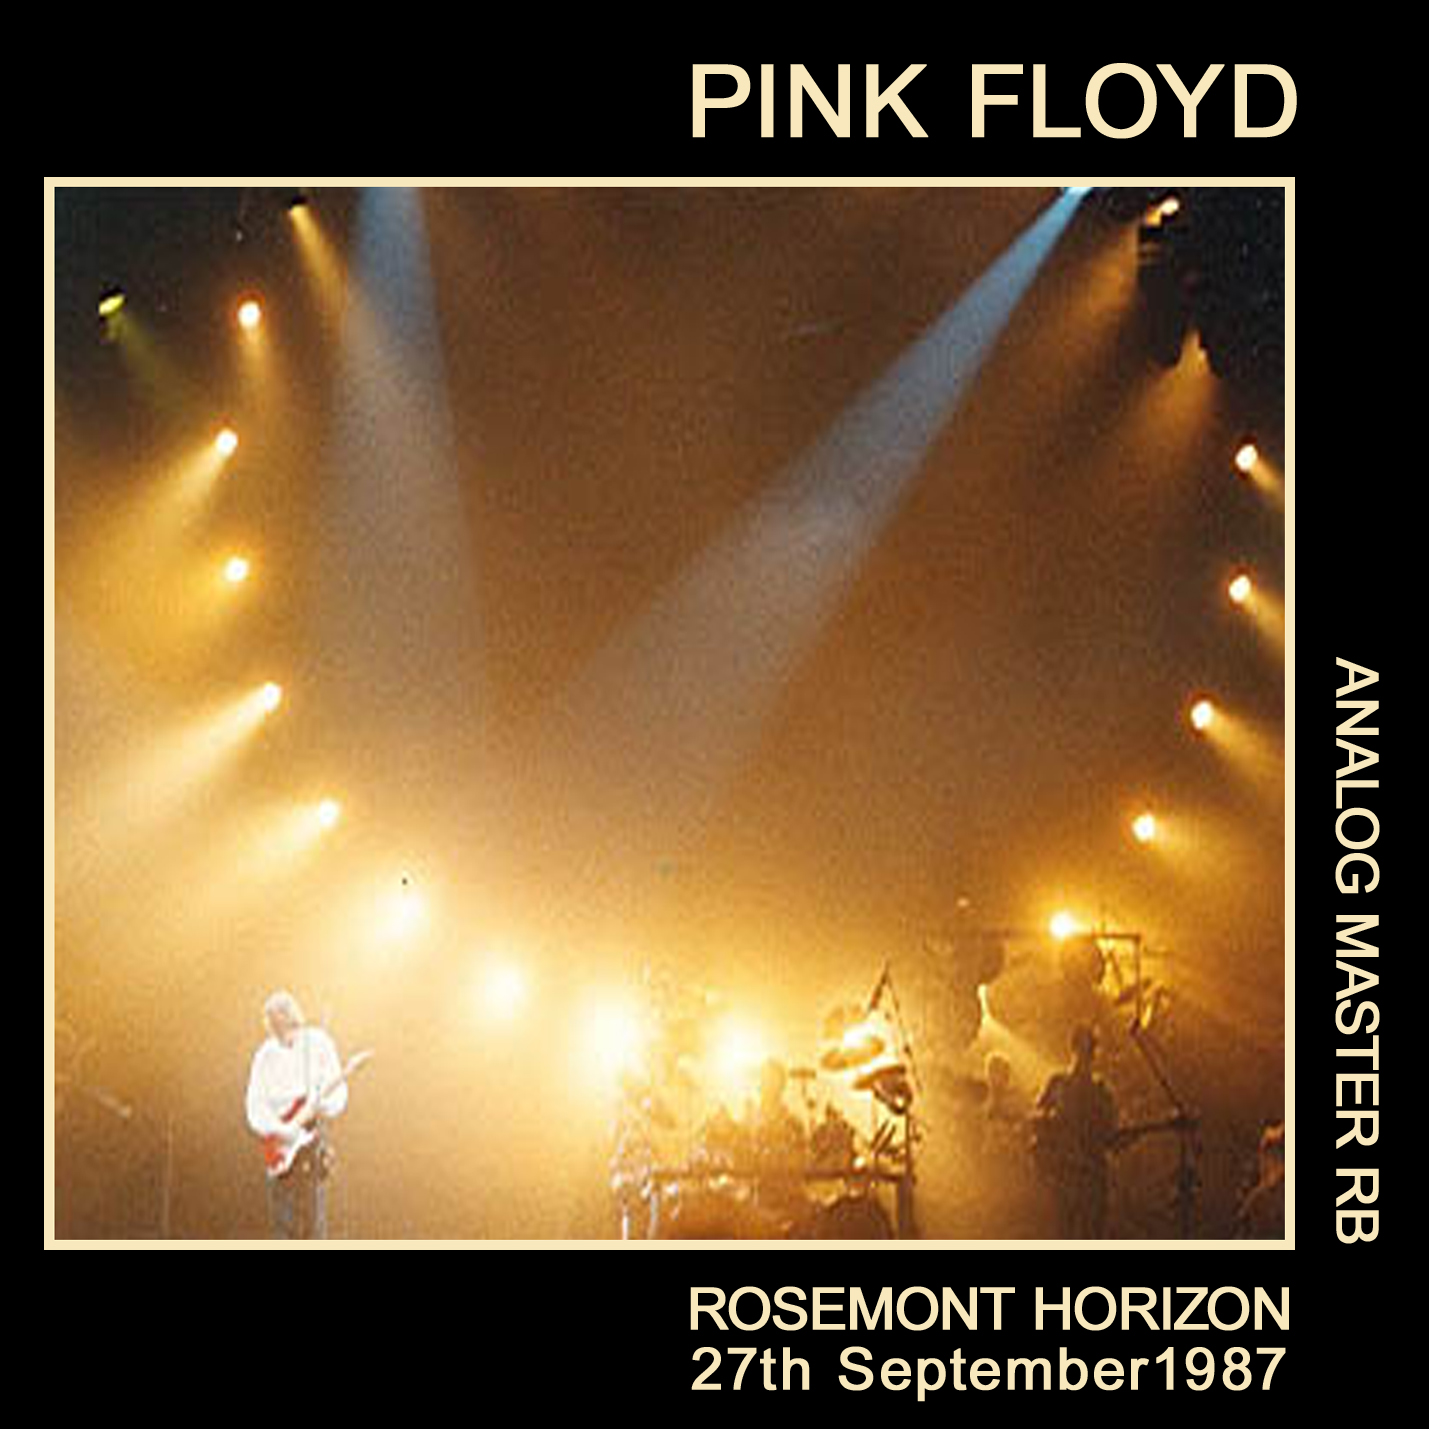 PinkFloyd1987-09-27RosemontHorizonIL.jpg